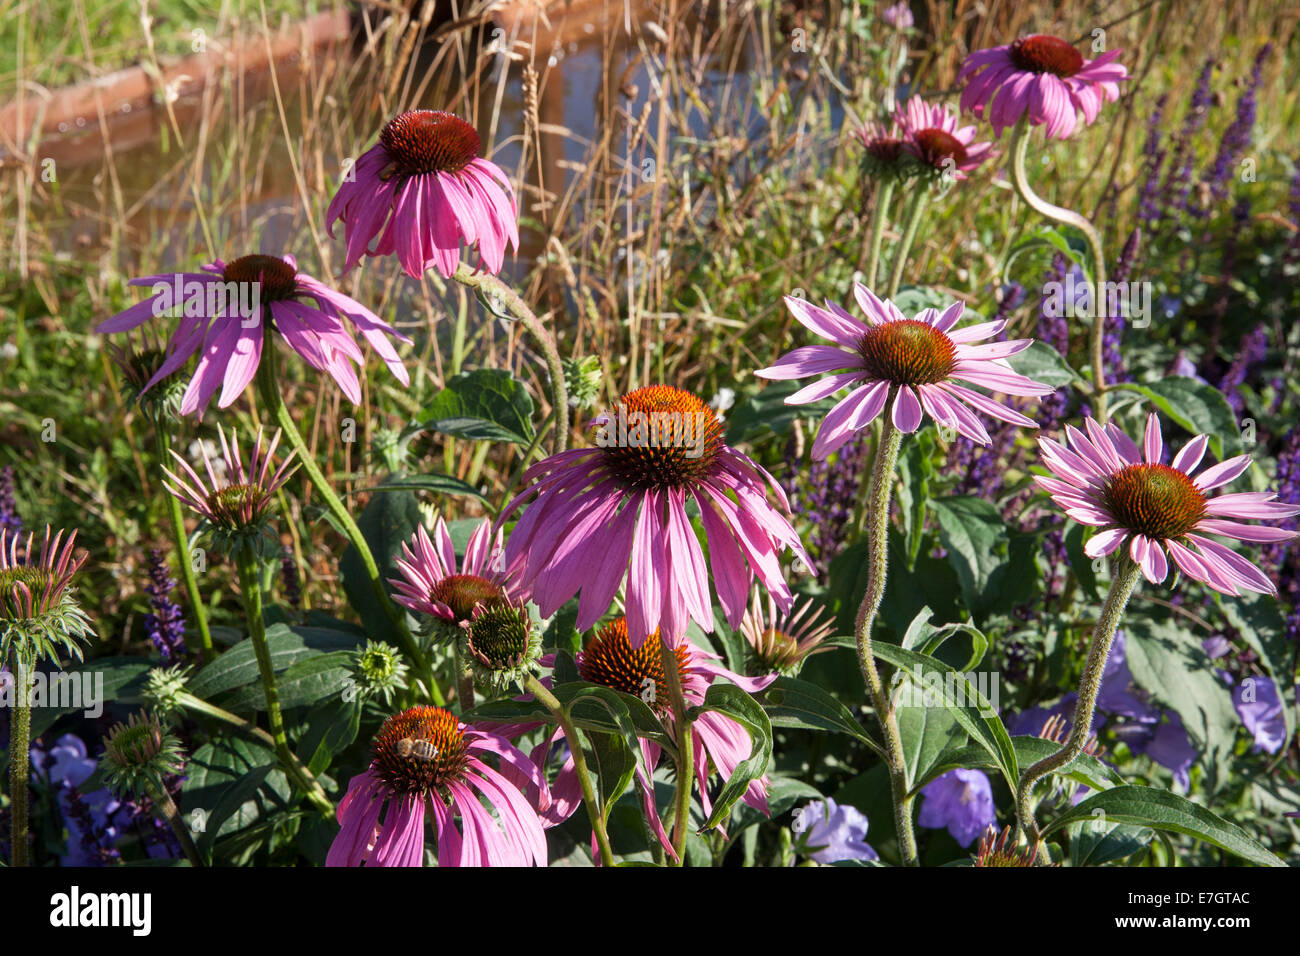 Jardin - Maggie's jardin forestier - Echinacea purpurea - Designers - Amanda Waring et Laura Arison - Promoteur Banque D'Images